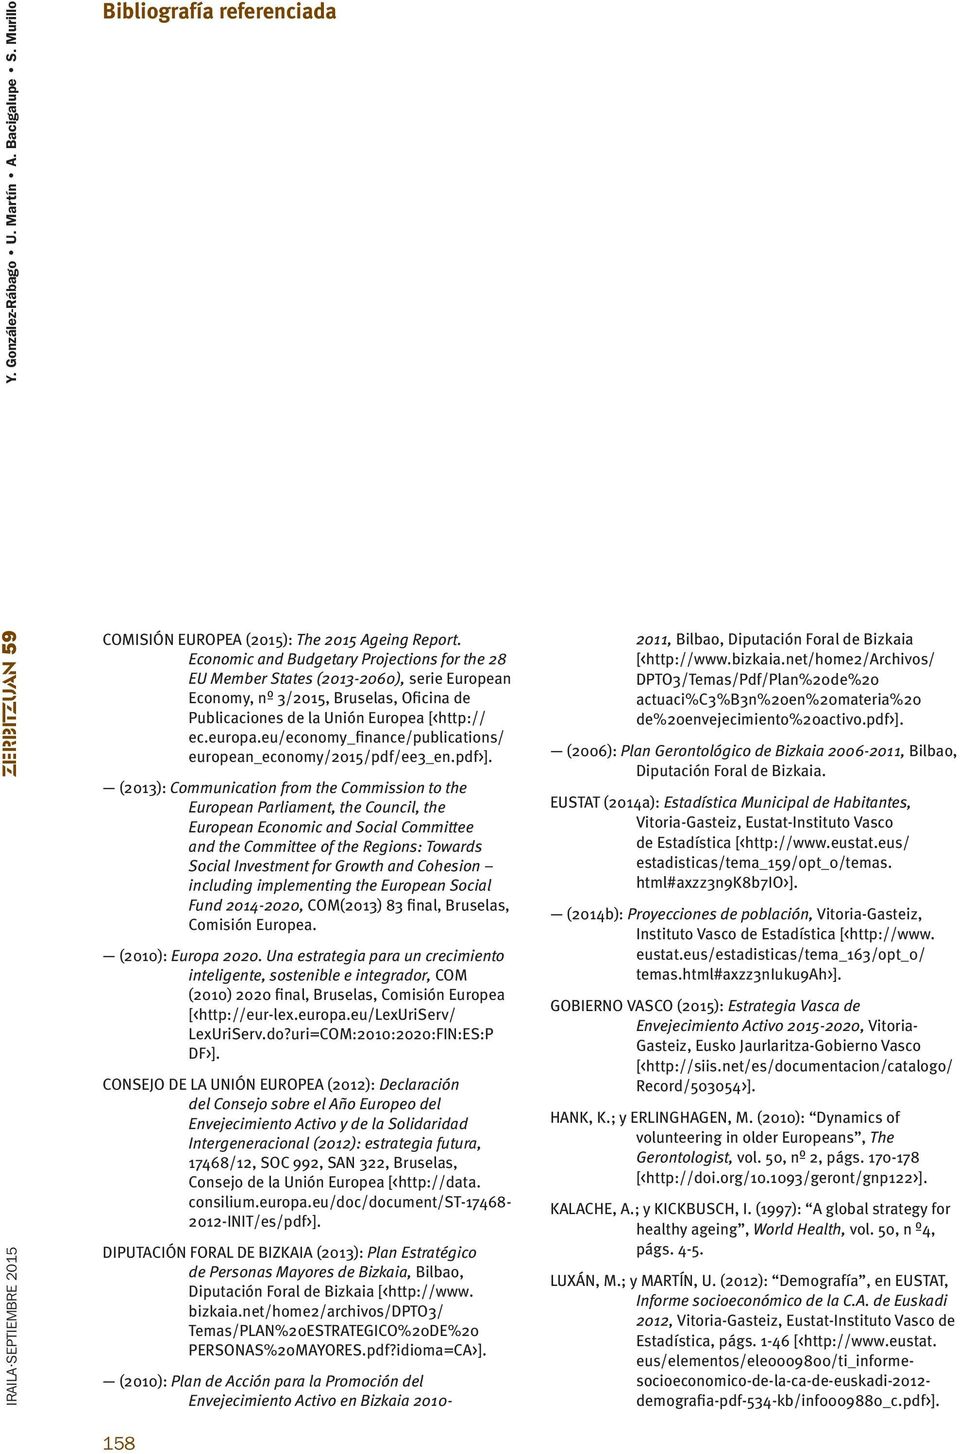 eu/economy_finance/publications/ european_economy/2015/pdf/ee3_en.pdf>].